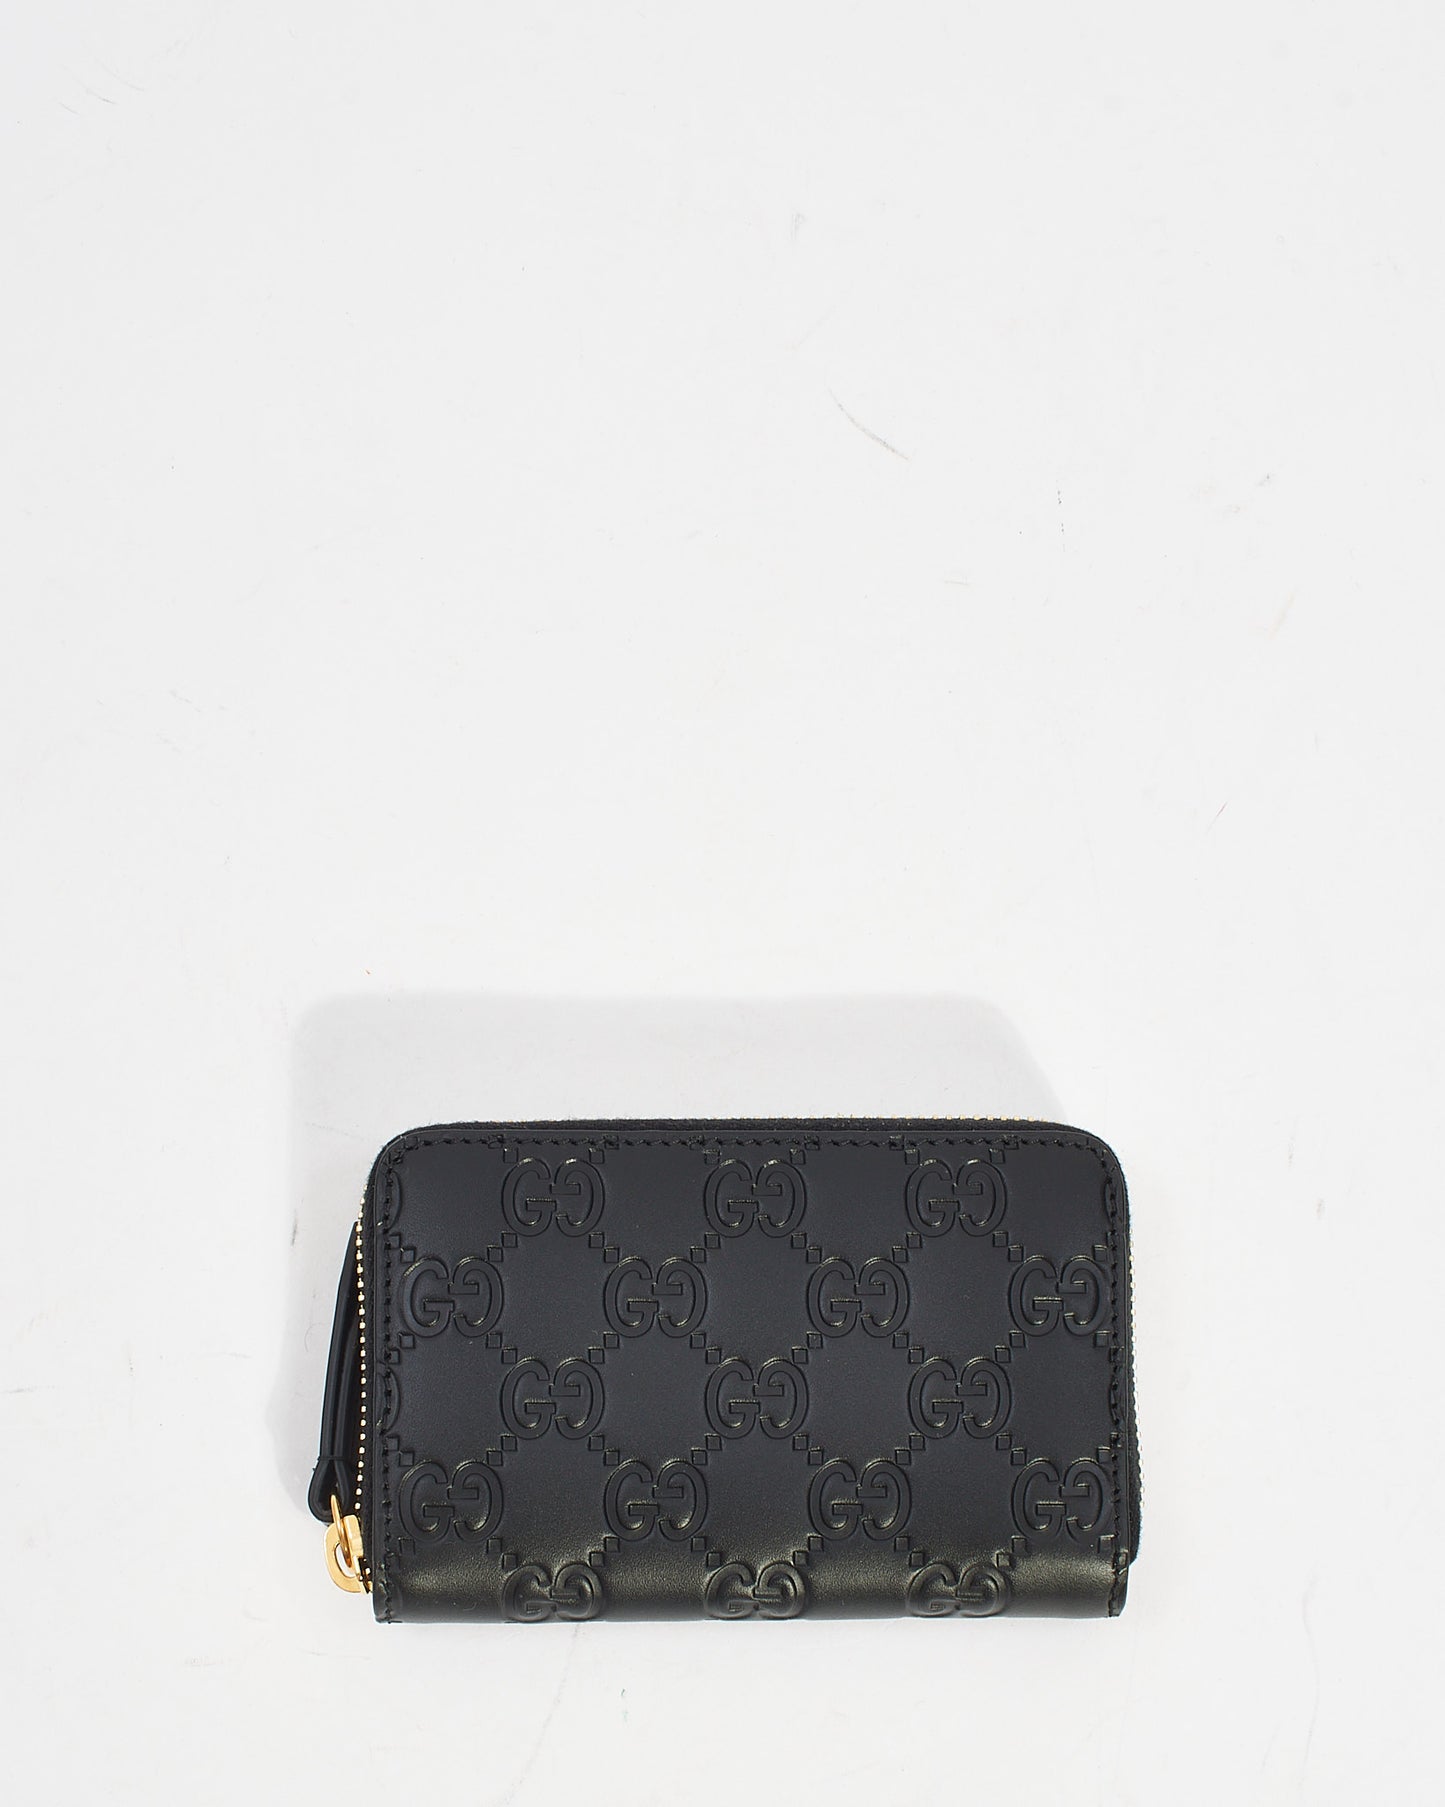 Gucci Black Signature G Leather Zippy Card Case Wallet